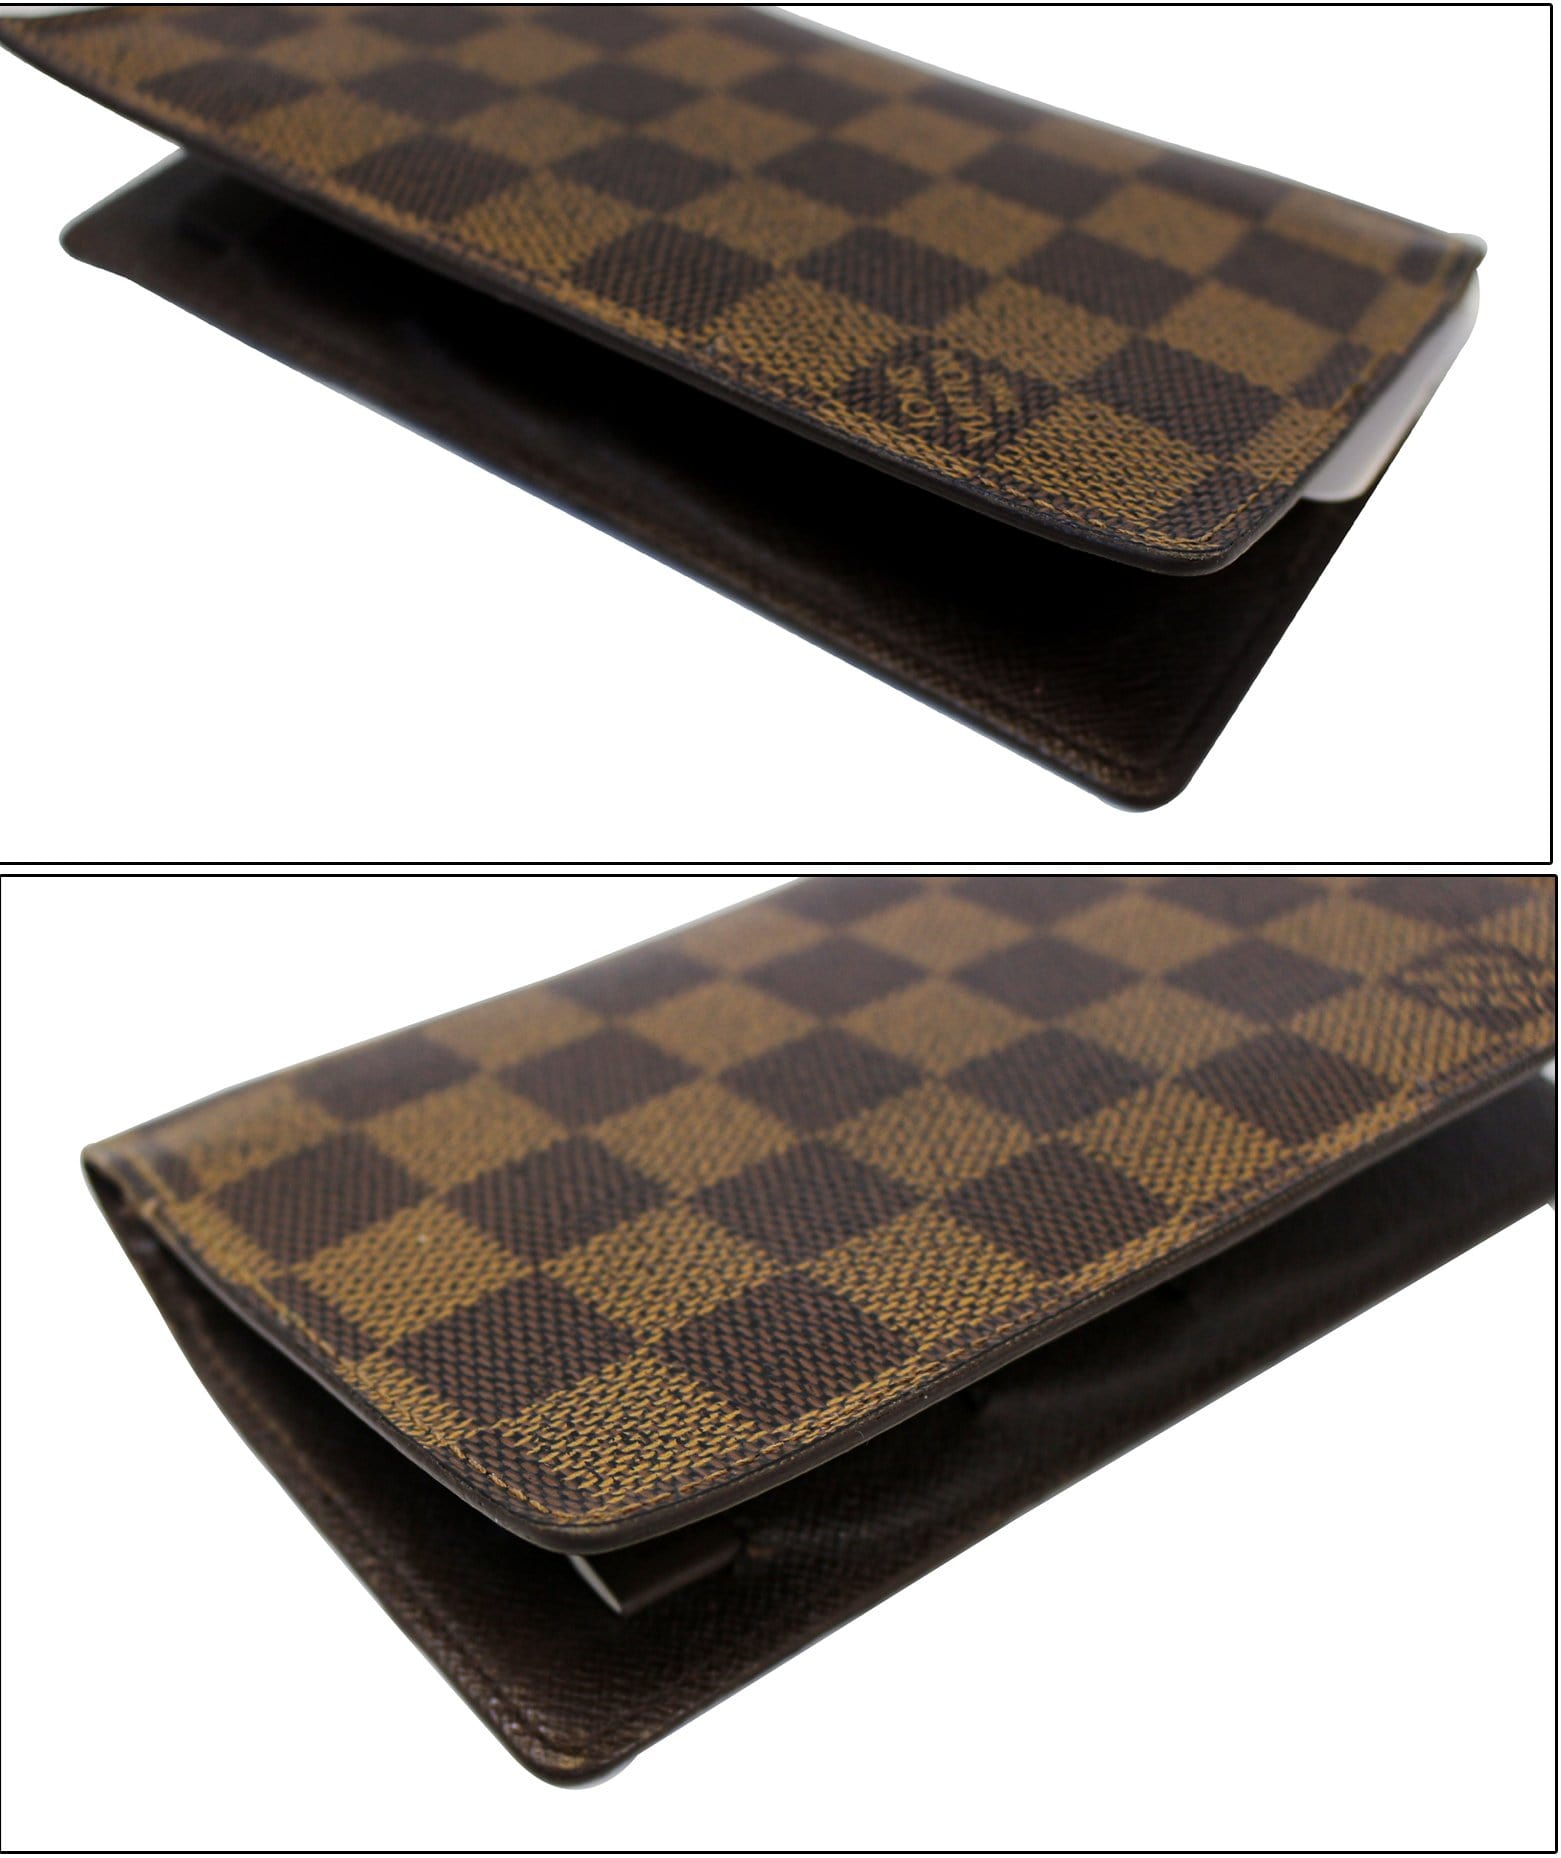 Louis Vuitton European Checkbook And Card Holder – Pursekelly